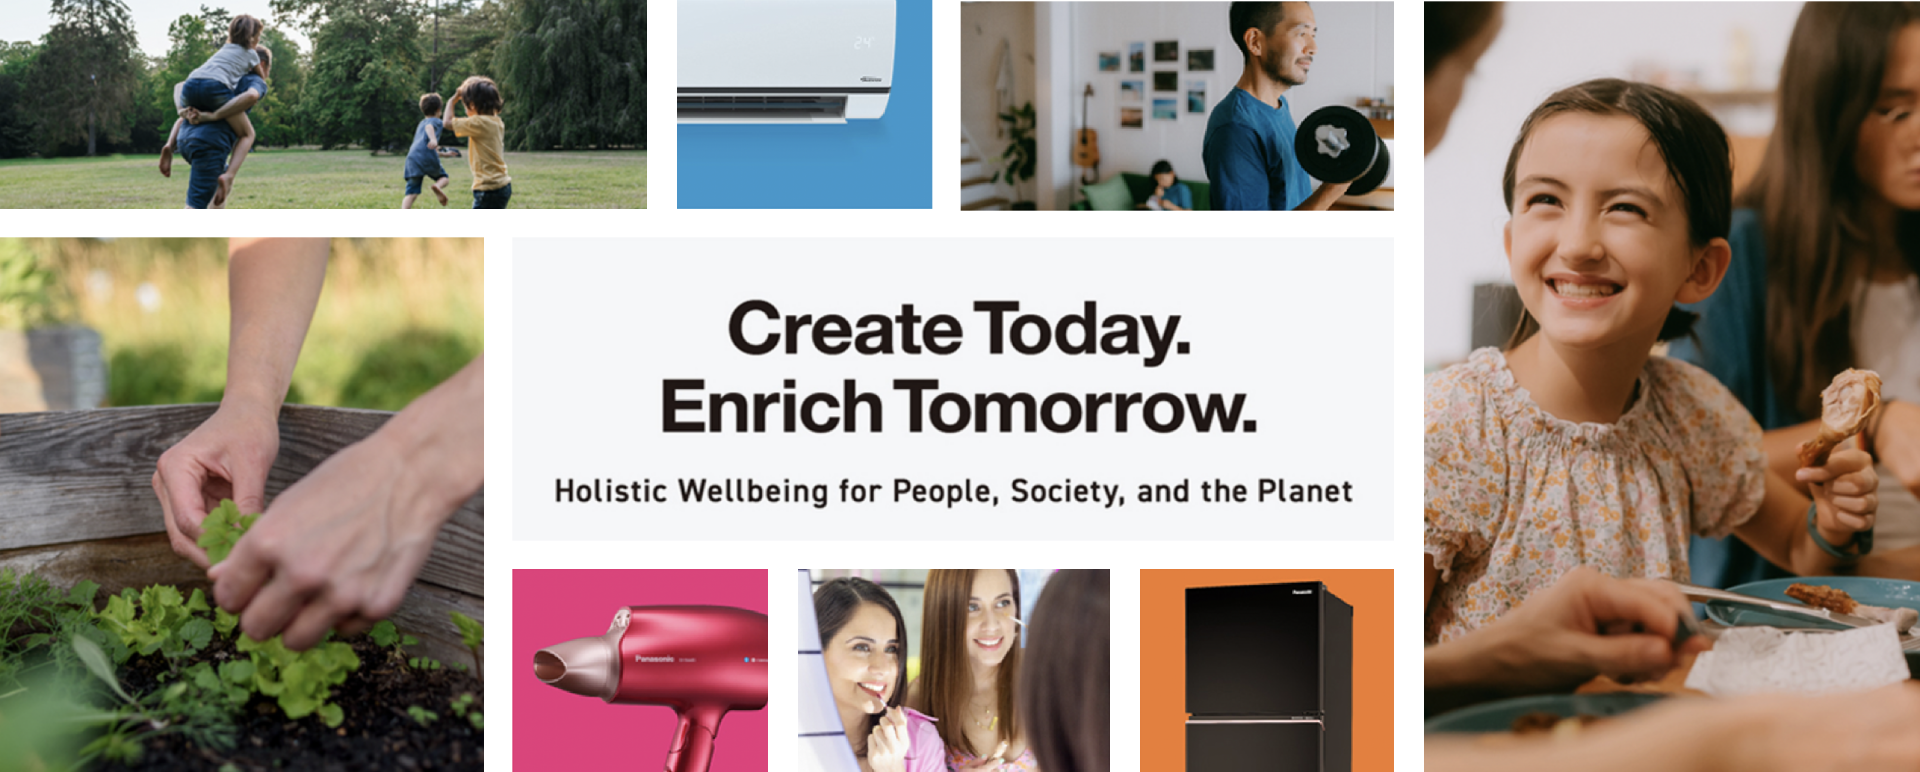 Create Today Enrich Tomorrow